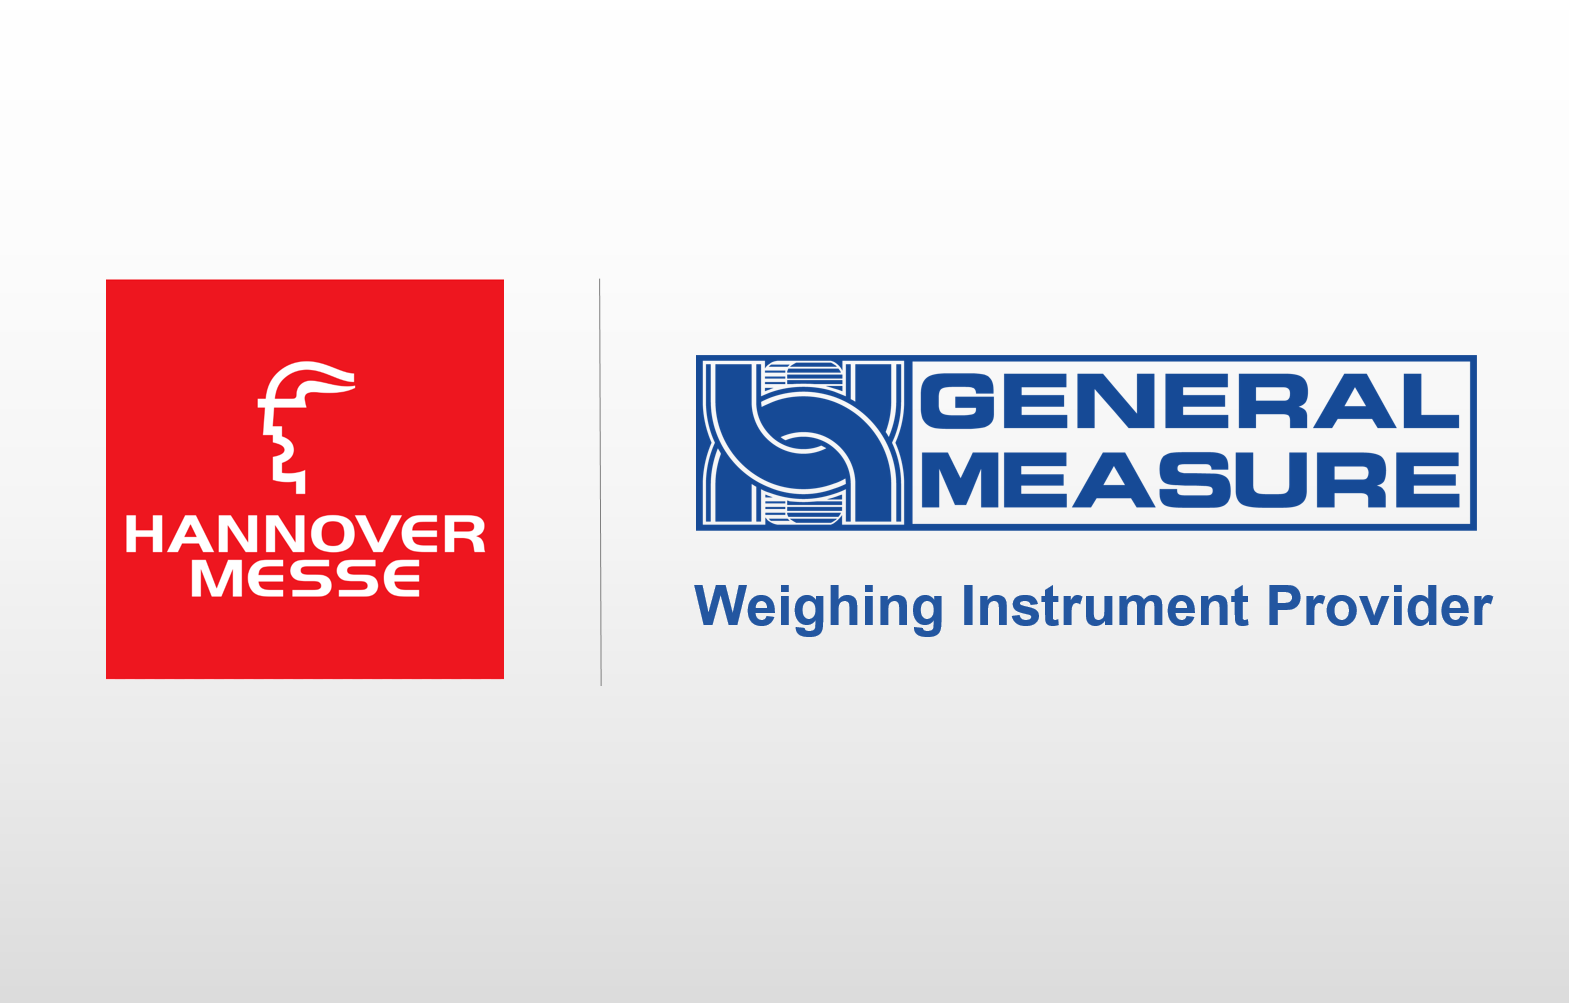 Meet General Measure at Hannover Messe